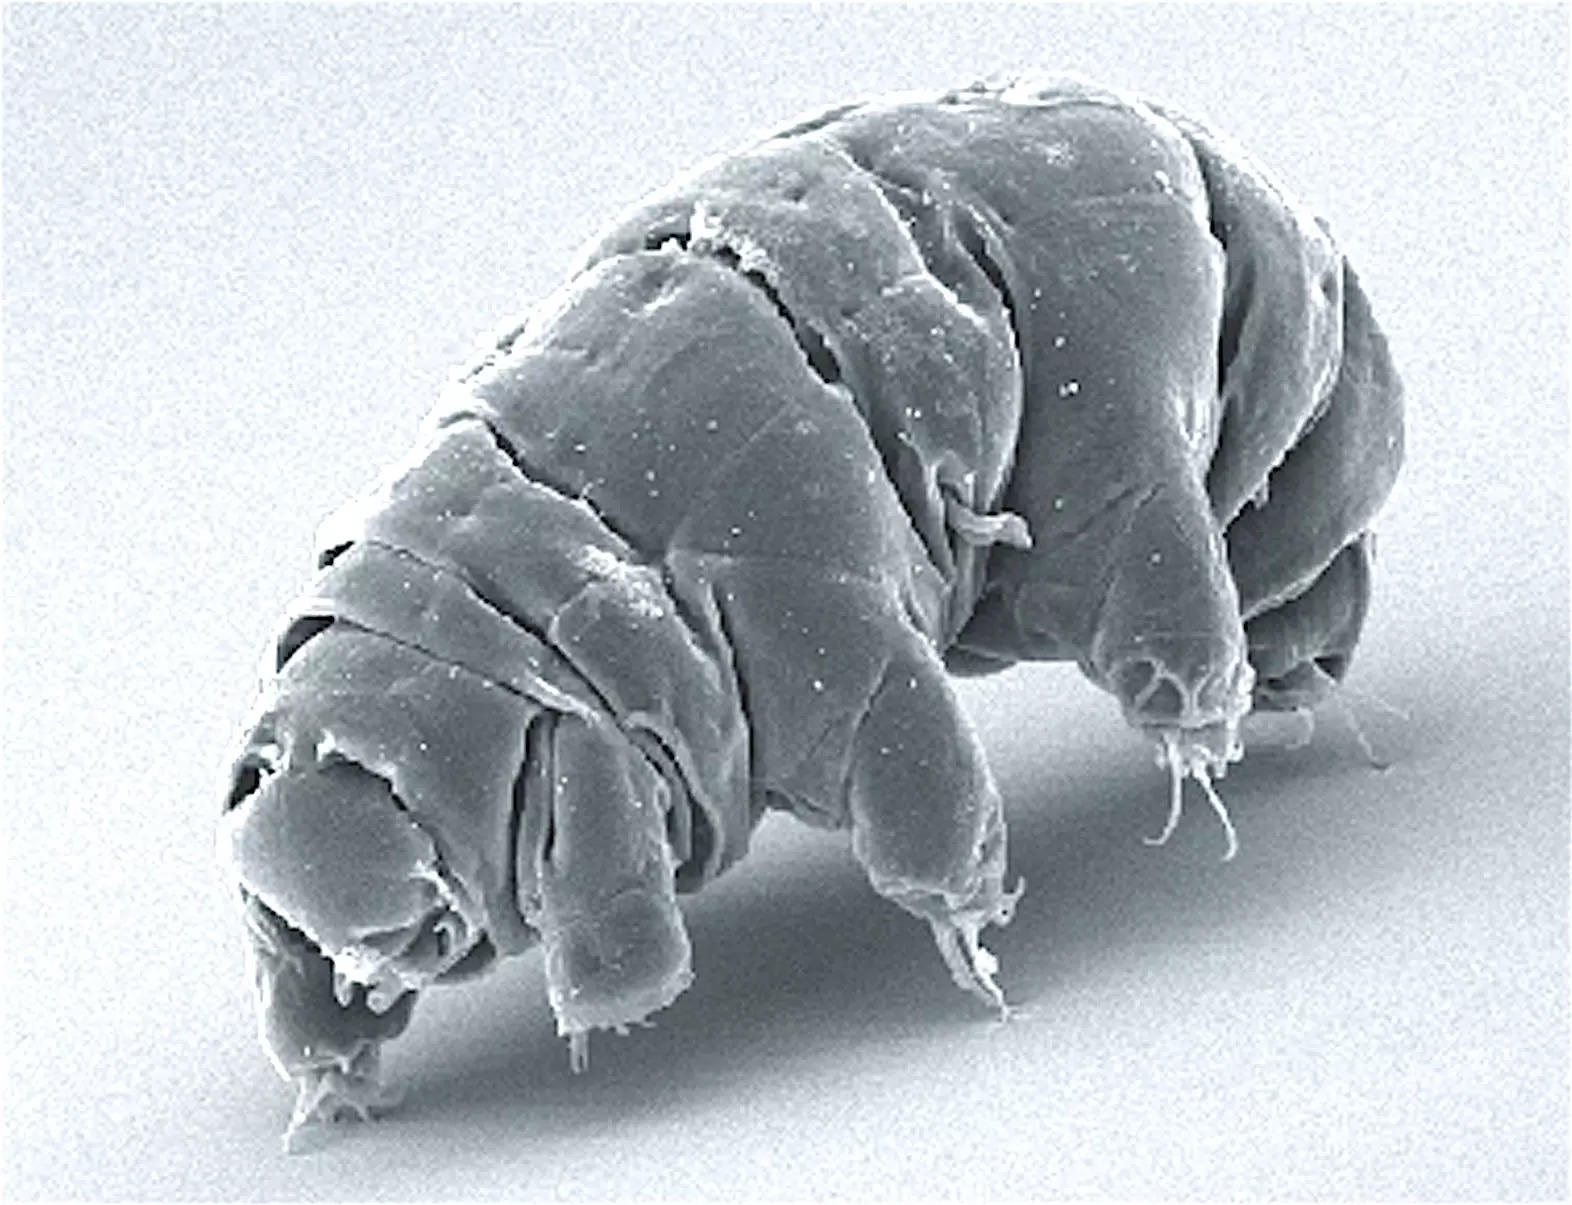 SEM image of a tardigrade, taken on November 16, 2012.